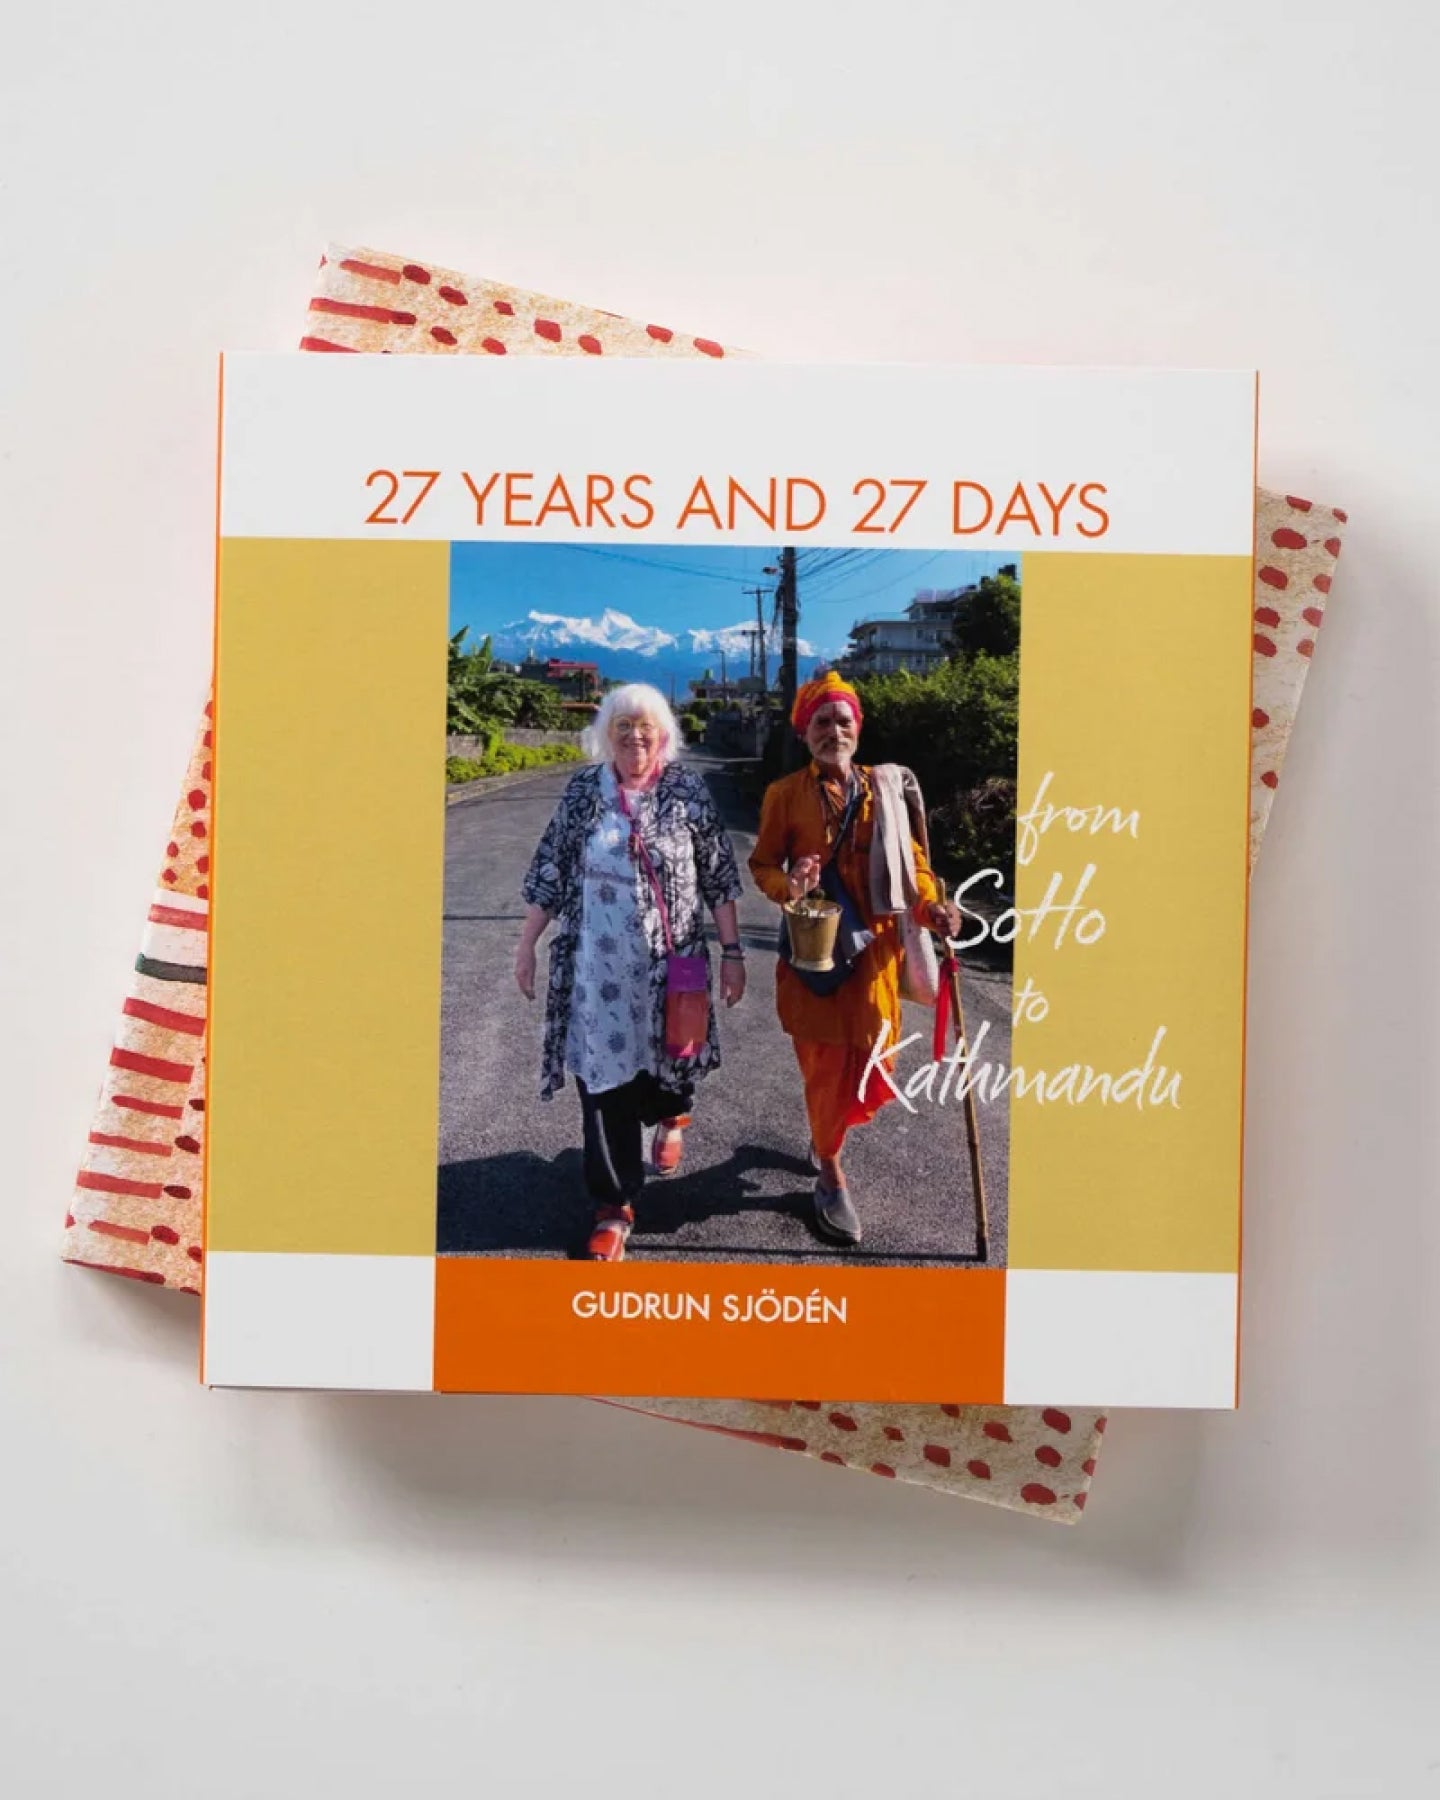 27 years,27 days: from SoHo to Katmandu
The book about Gudrun Sjödéns journey back to
Kathmandu